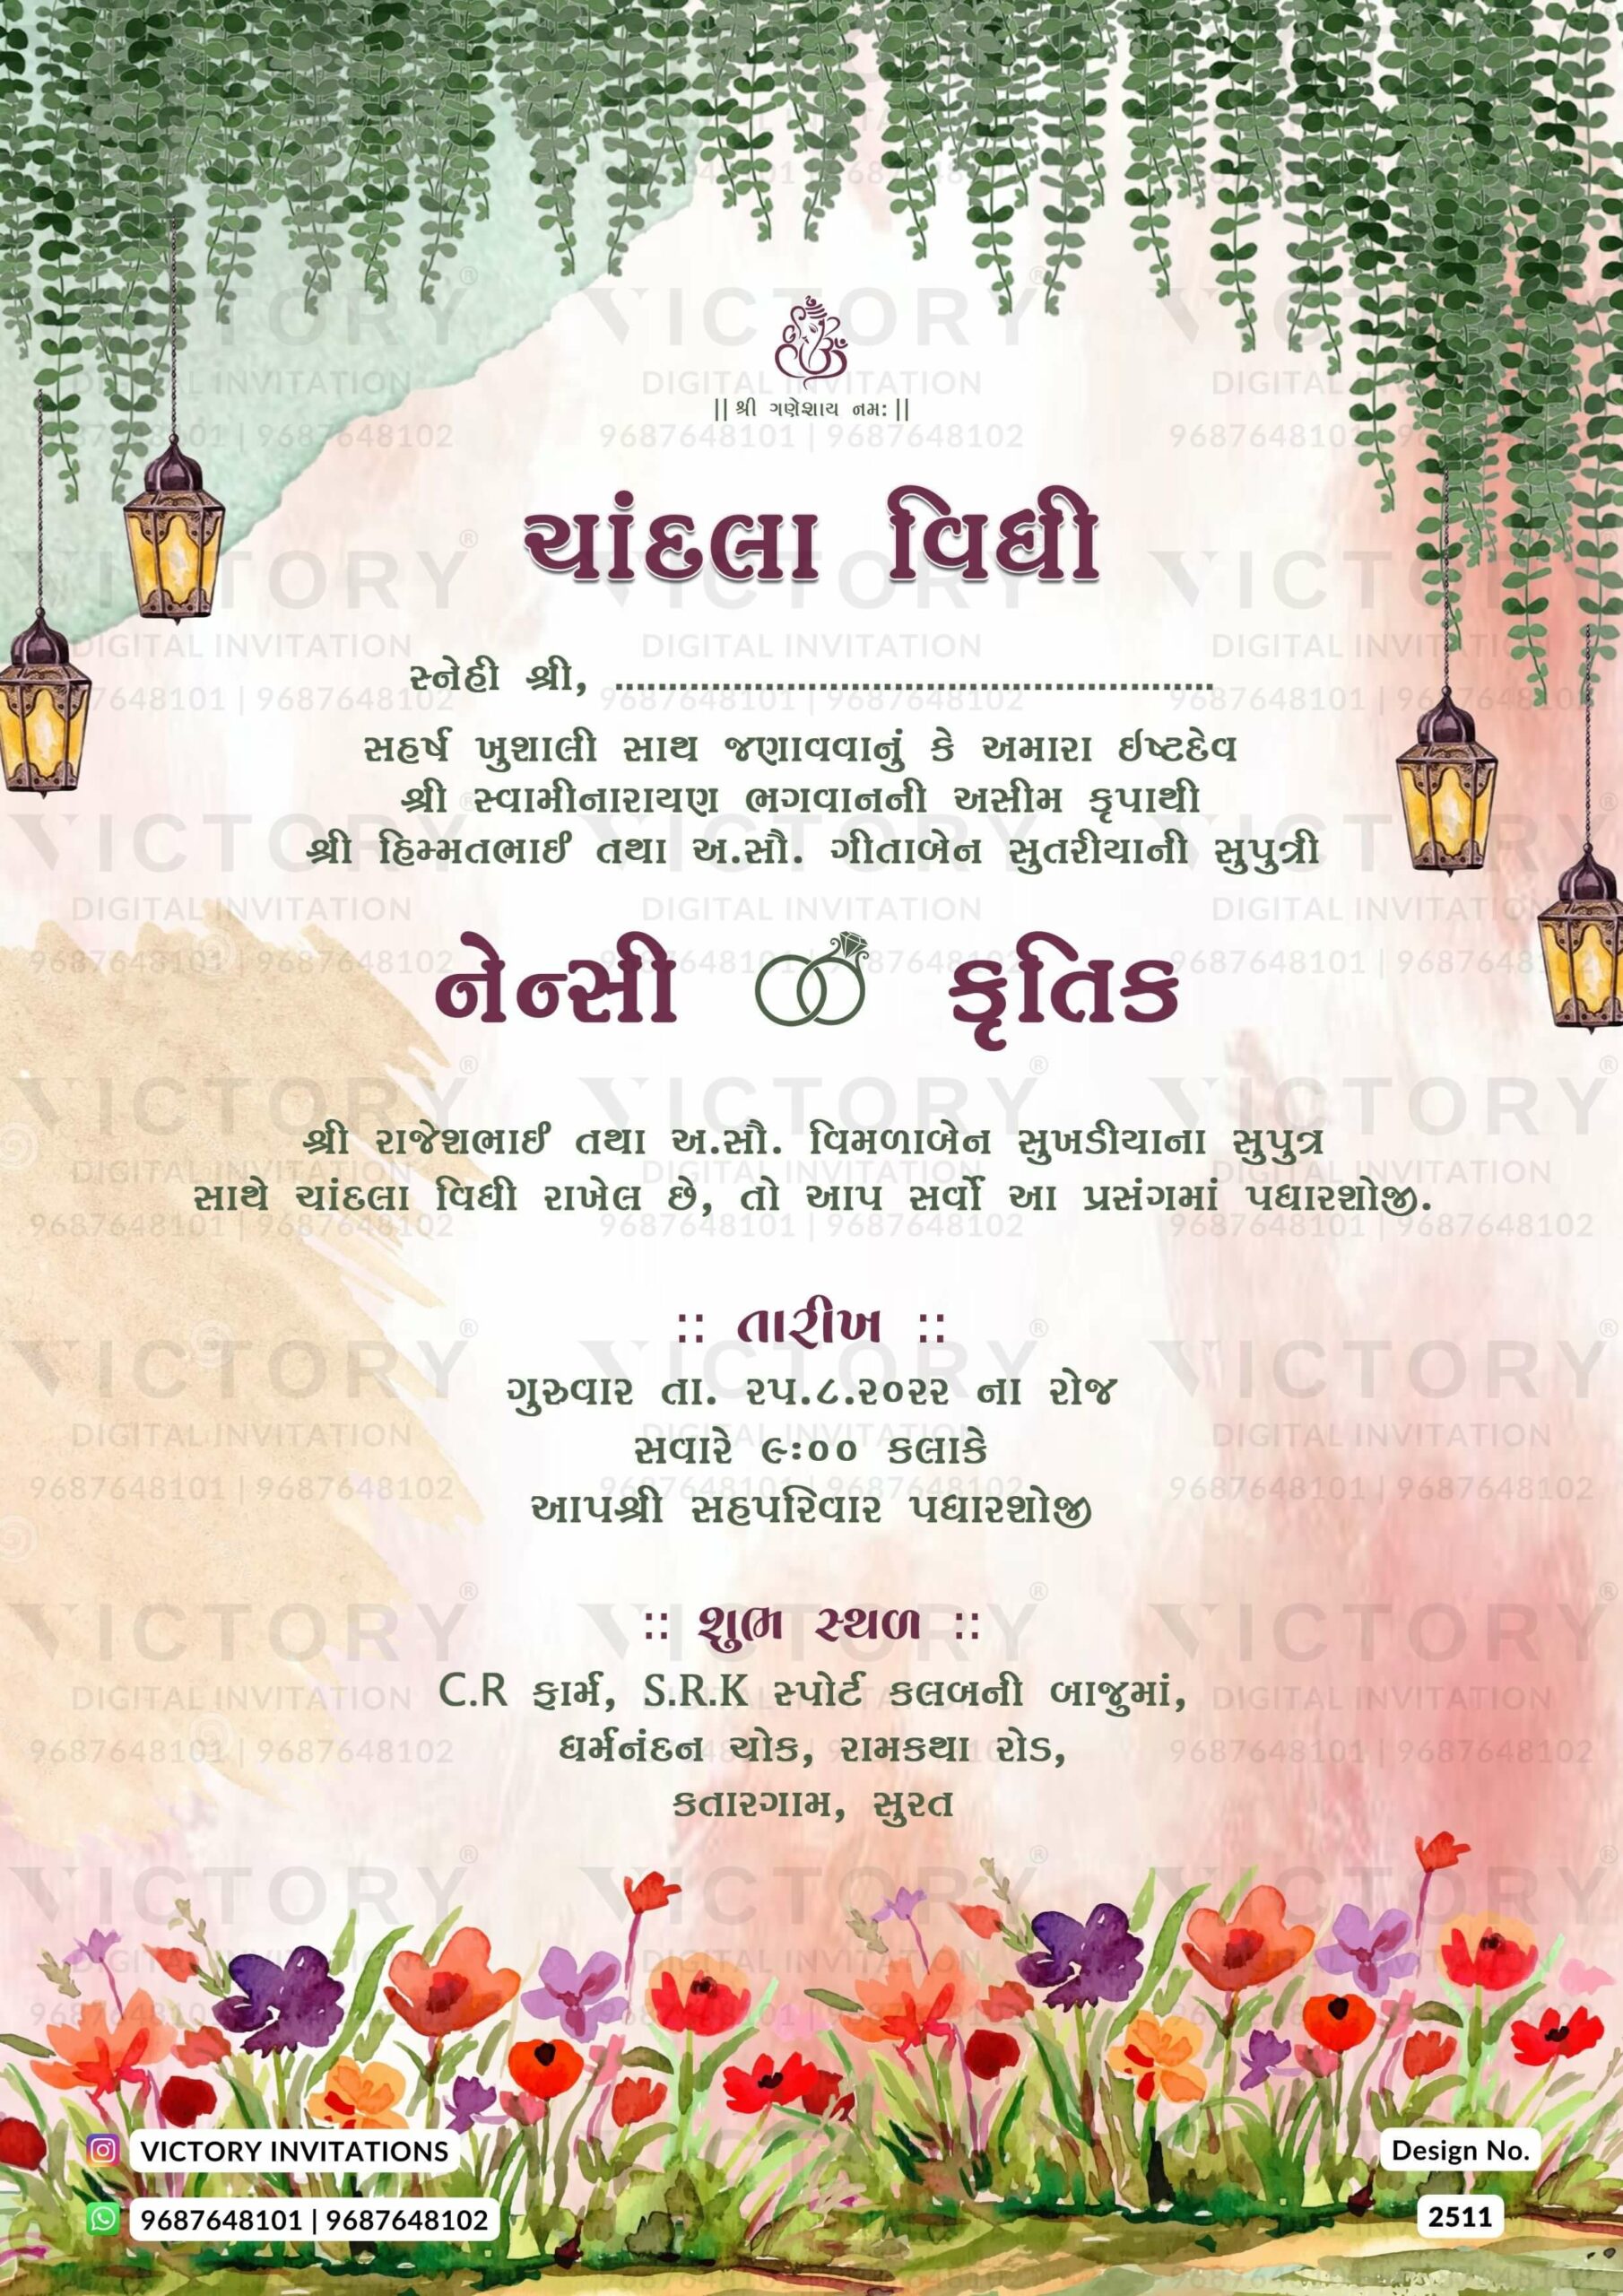 garden theme colorful engagement digital card in Gujarati language design 2511